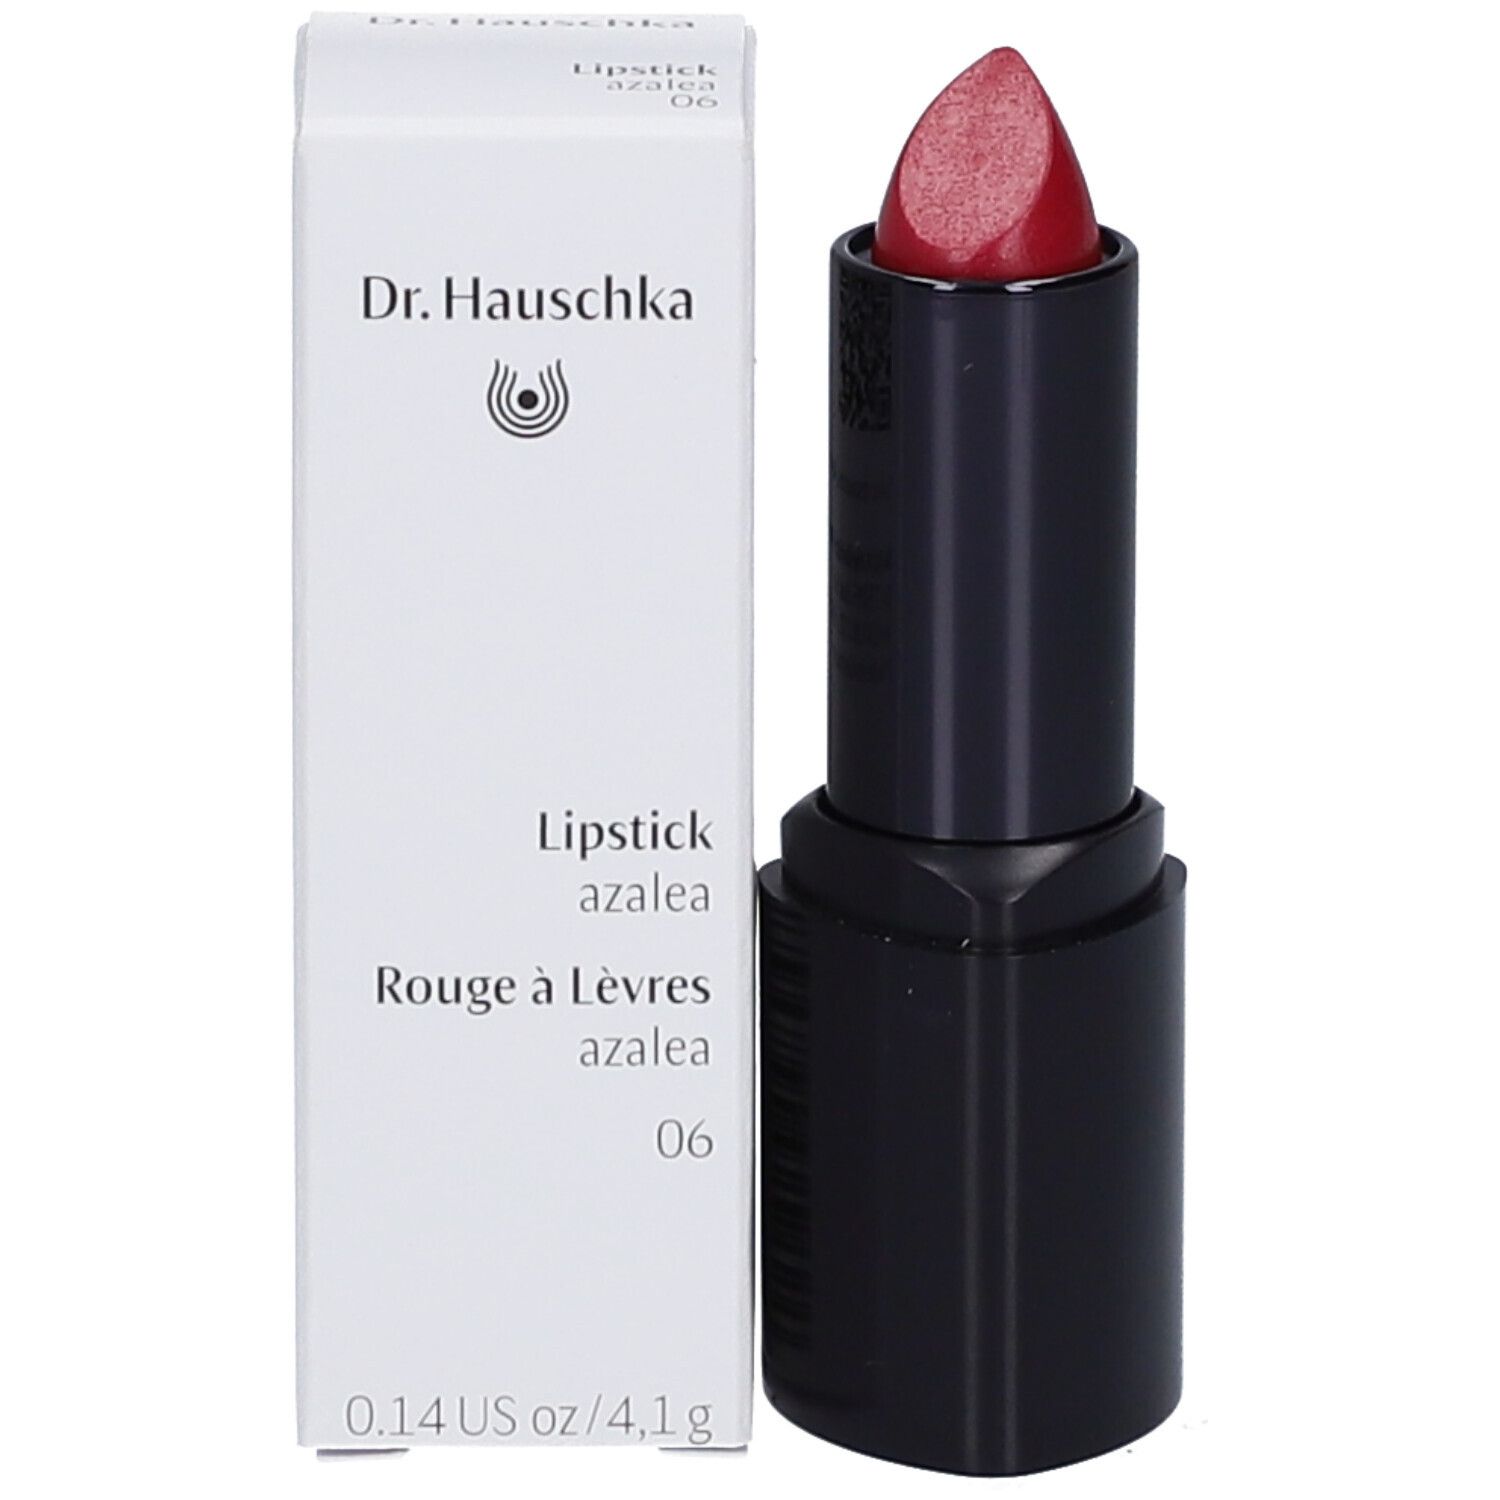 Dr. Hauschka Lipstick 06 azalea 4,1g